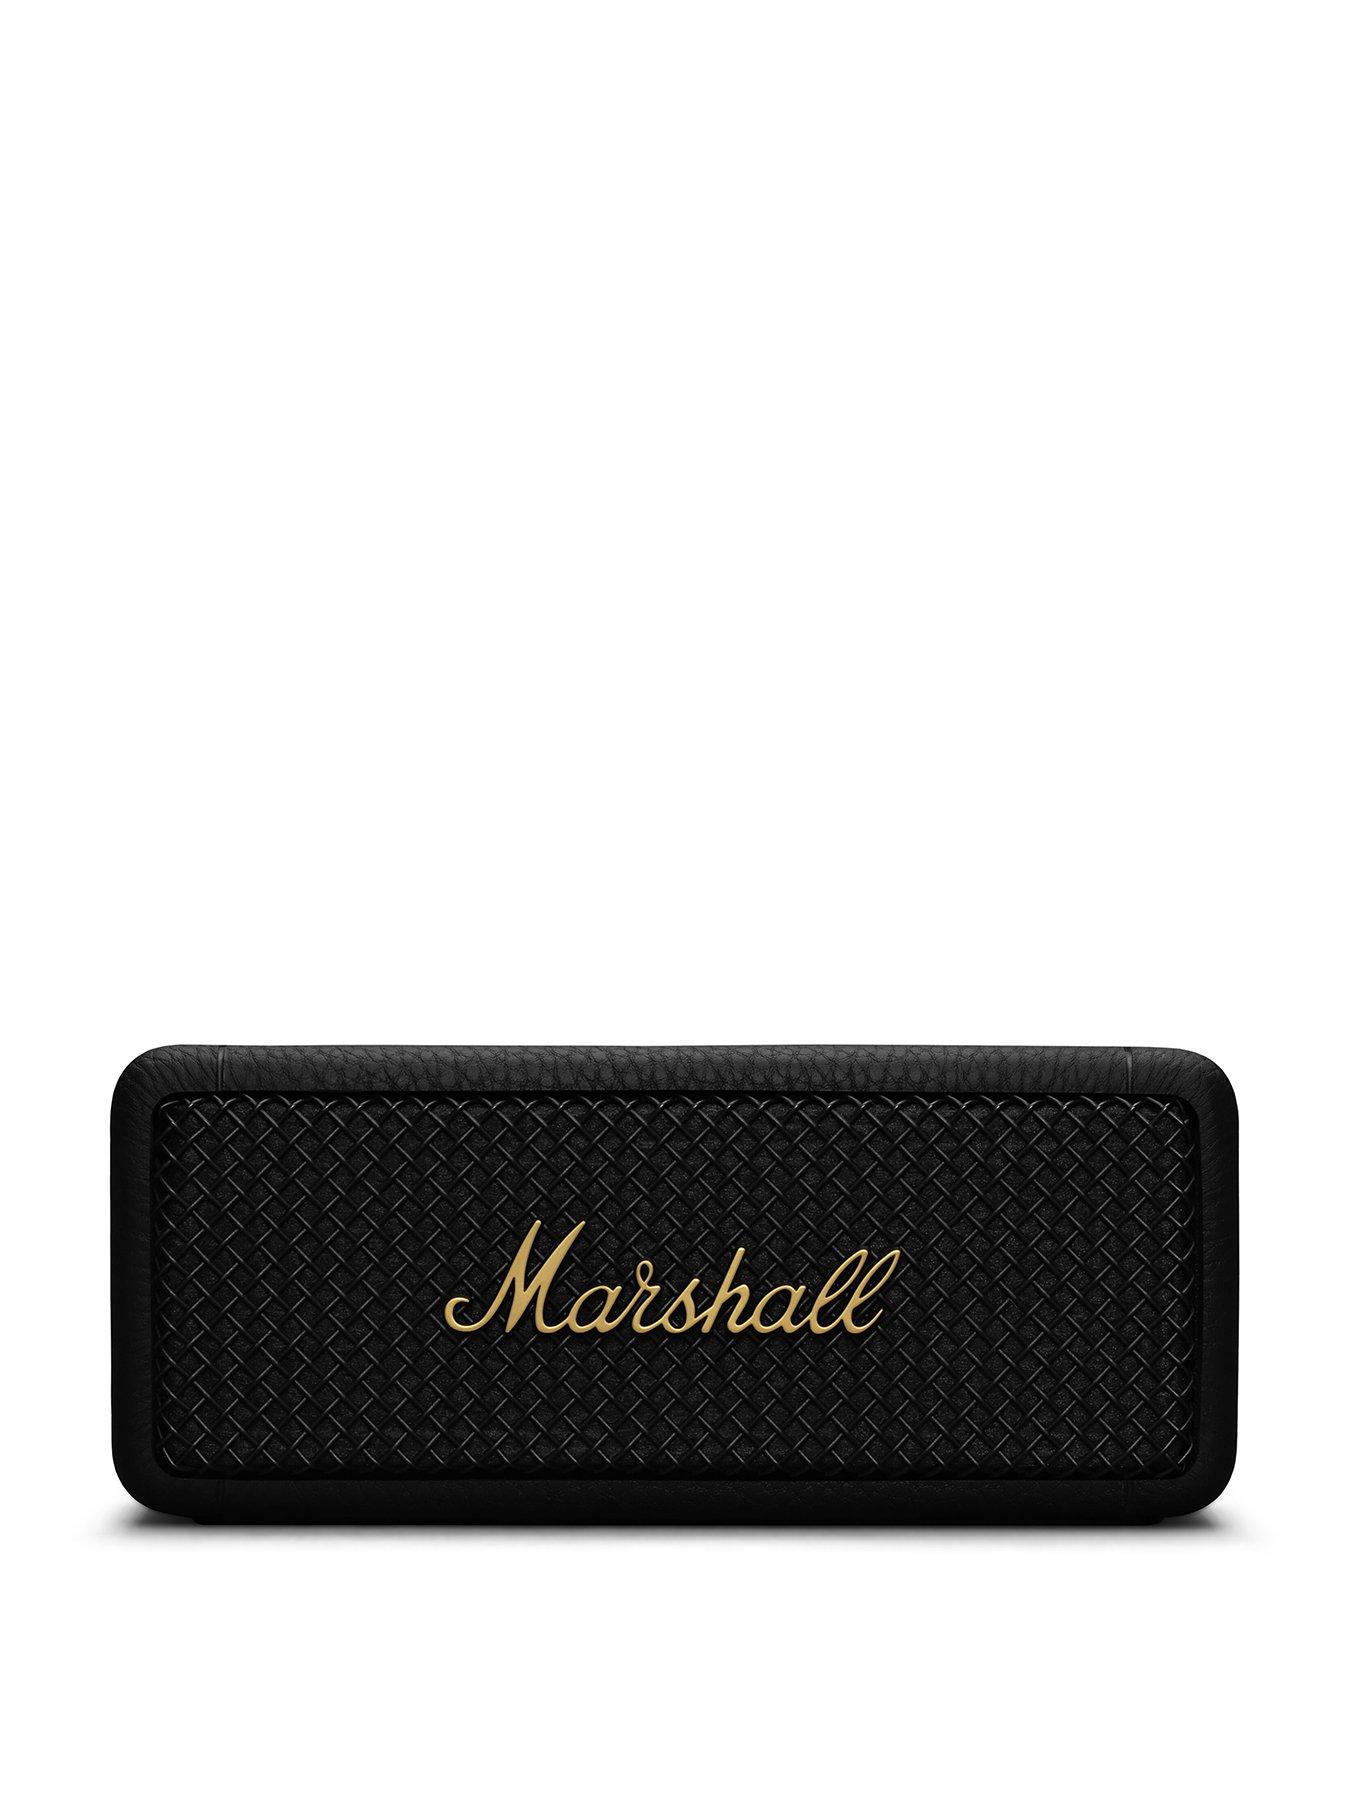 Marshall Emberton Diamond Jubilee: elegant and portable - Son-Vidéo.com:  blog